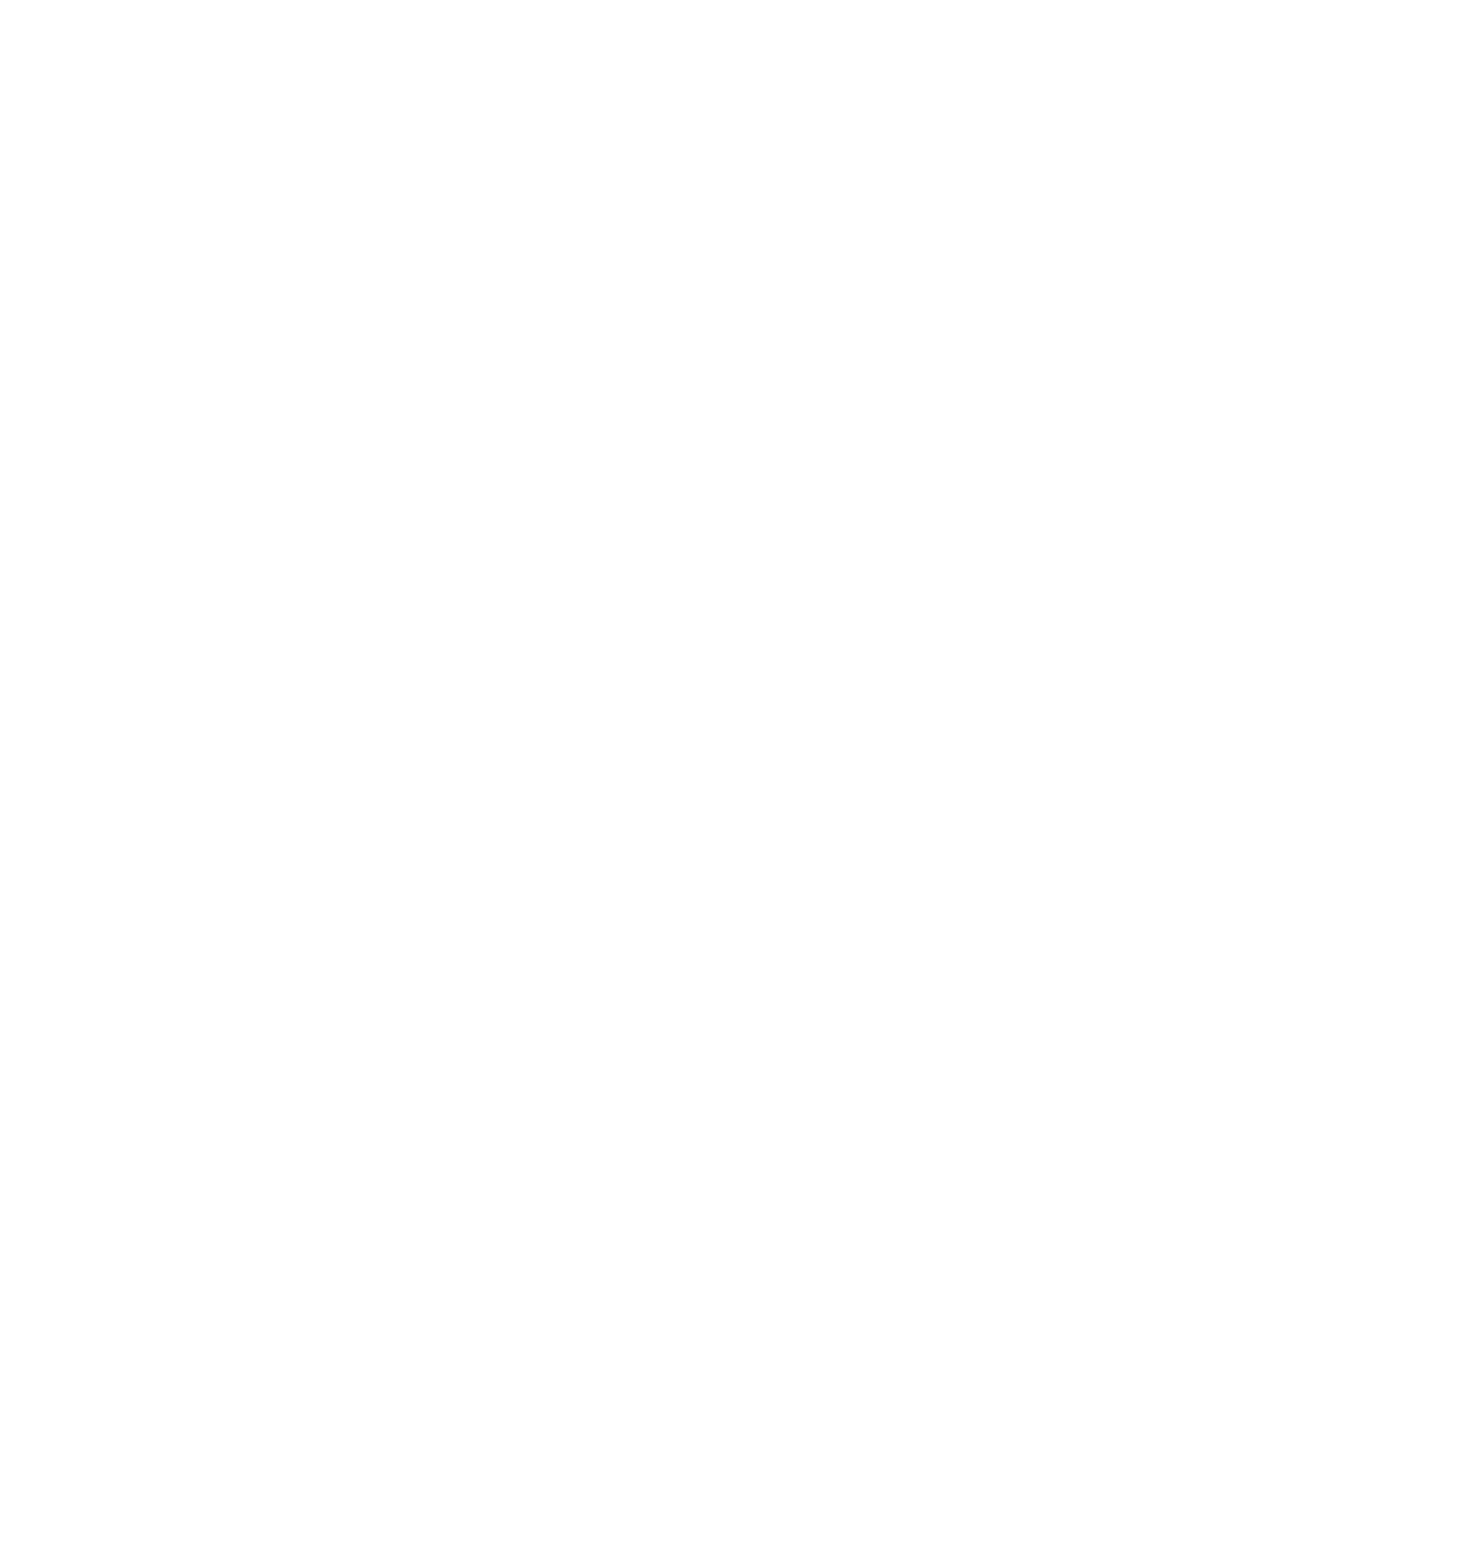 Anacostia Trails Heritage Area, Inc.